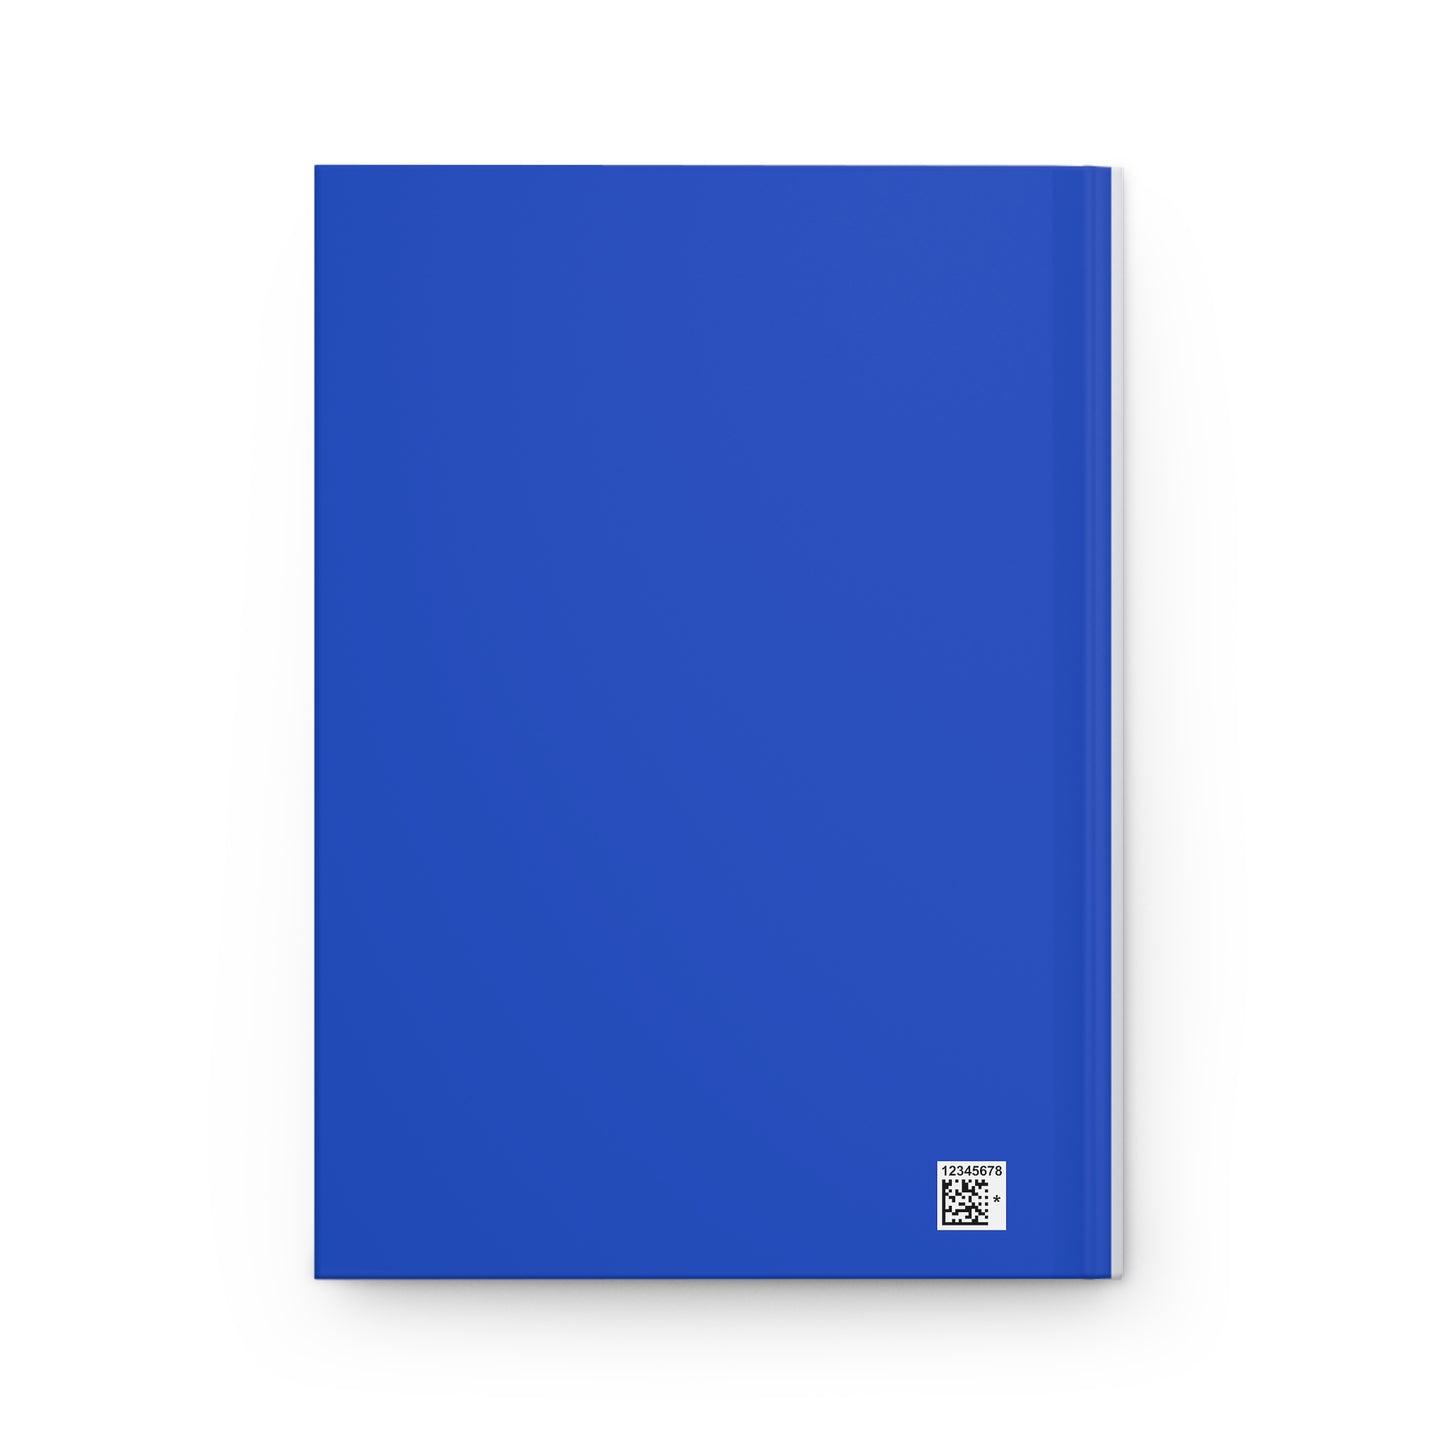 Zeta Phi Beta (Cardigan Design) Journal Matte